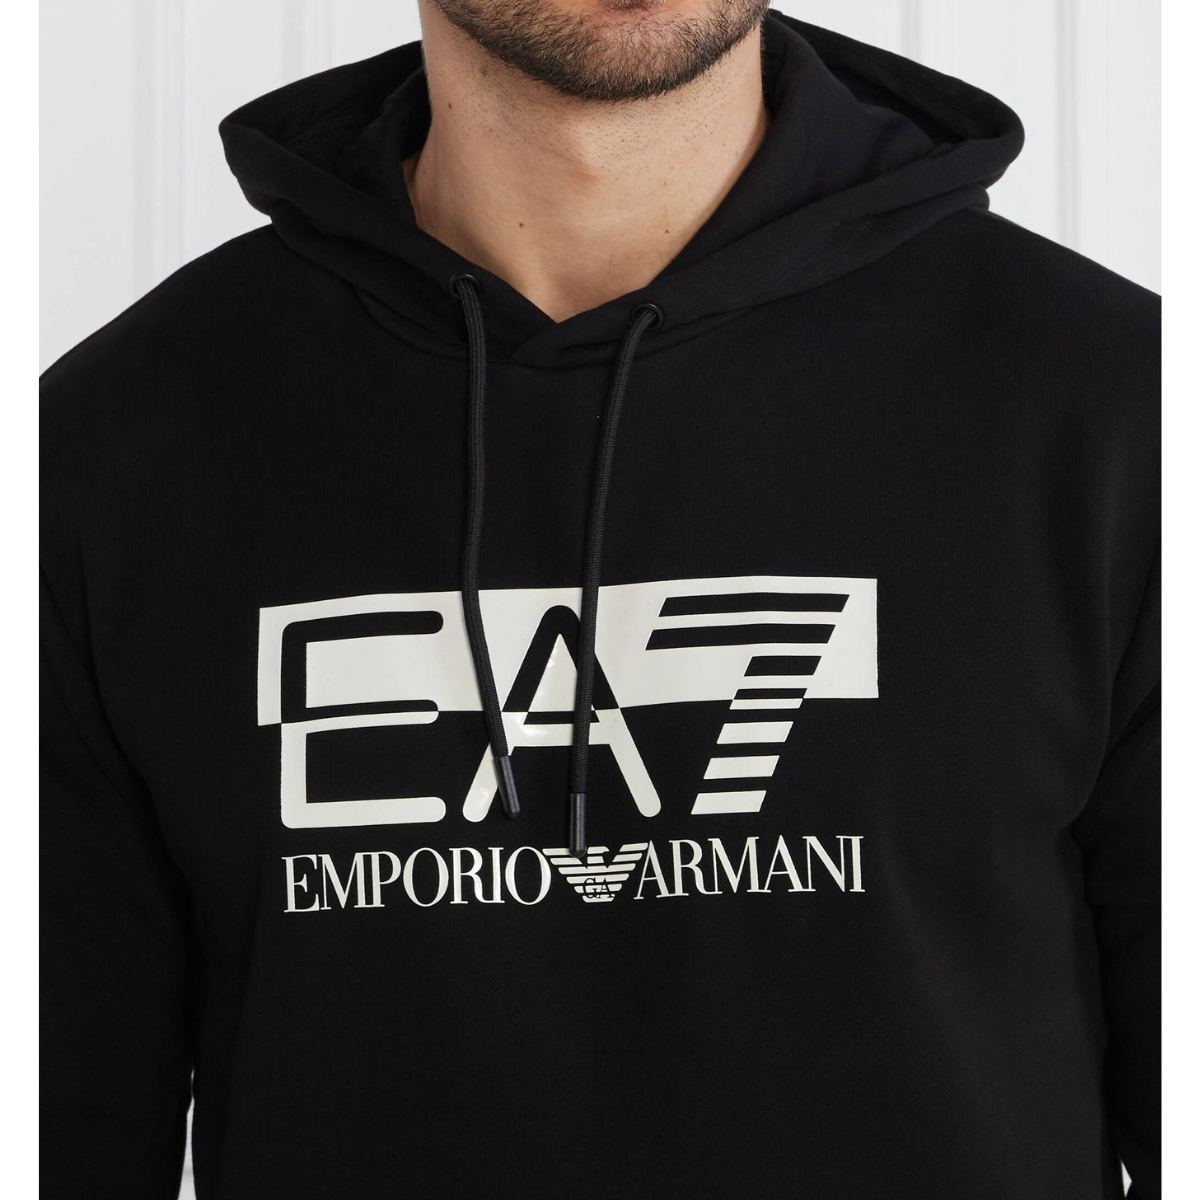 EA7 Giorgio Armani - Man Jersey Sweatshirt - Black